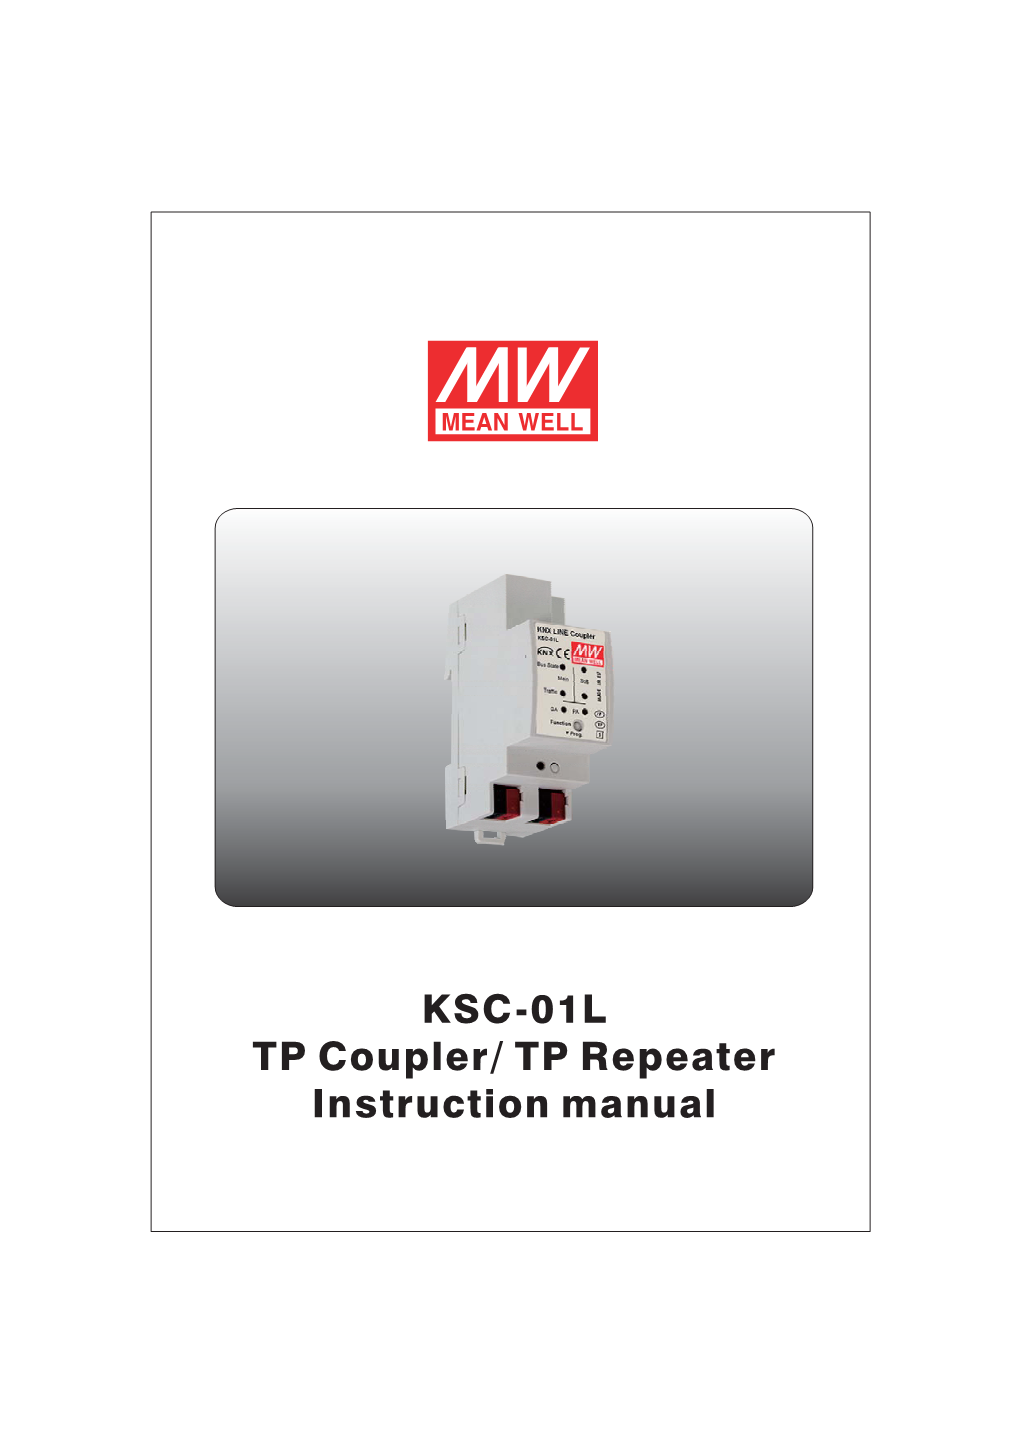 KSC-01L TP Coupler/ TP Repeater Instruction Manual KSC-01L Instruction Manual